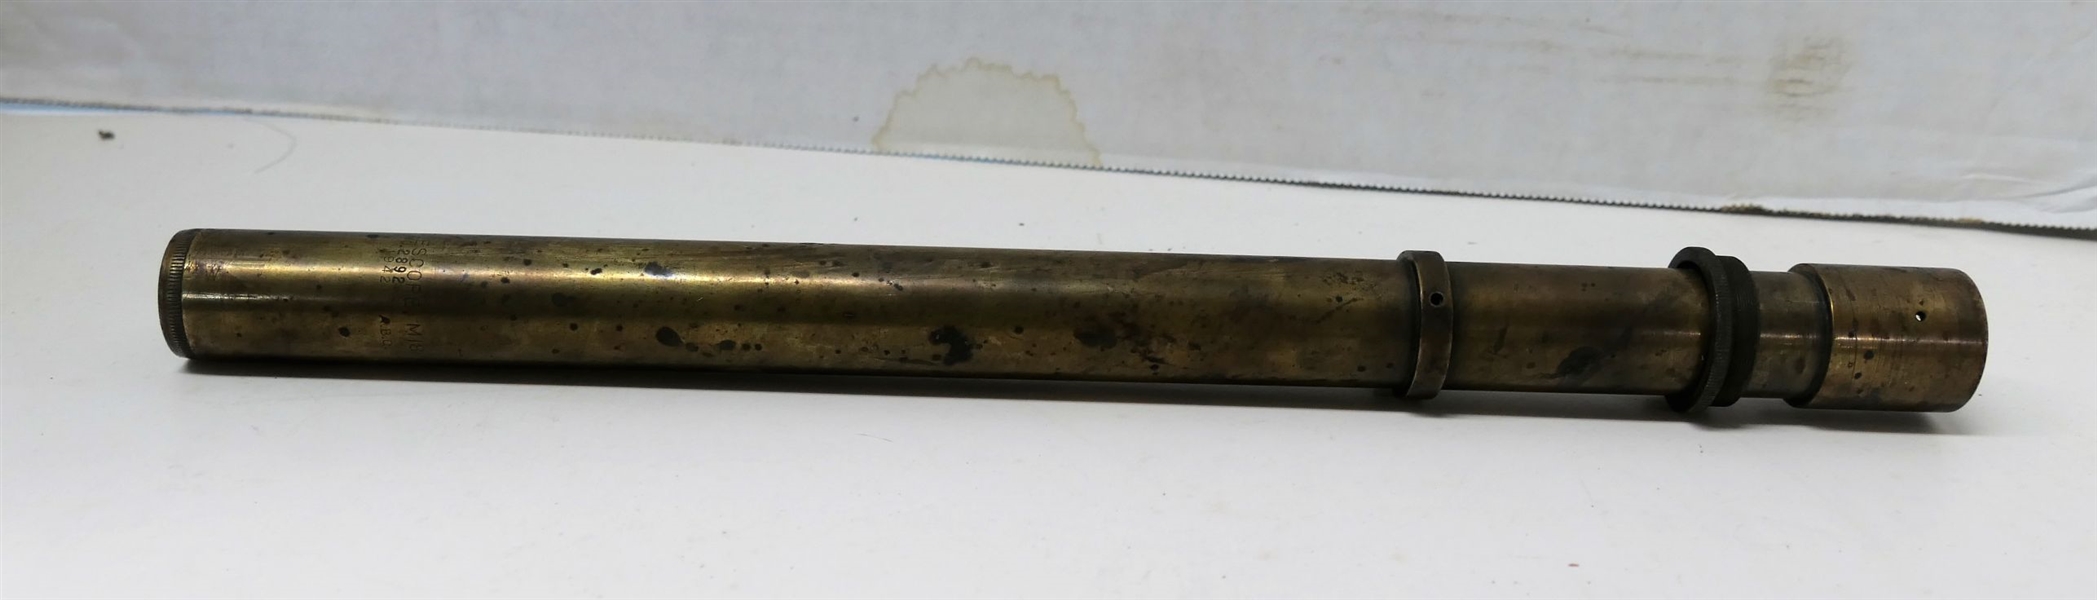 World War 2 US Brass Telescope M18 Scope Dated 1942-Optics Good Shape